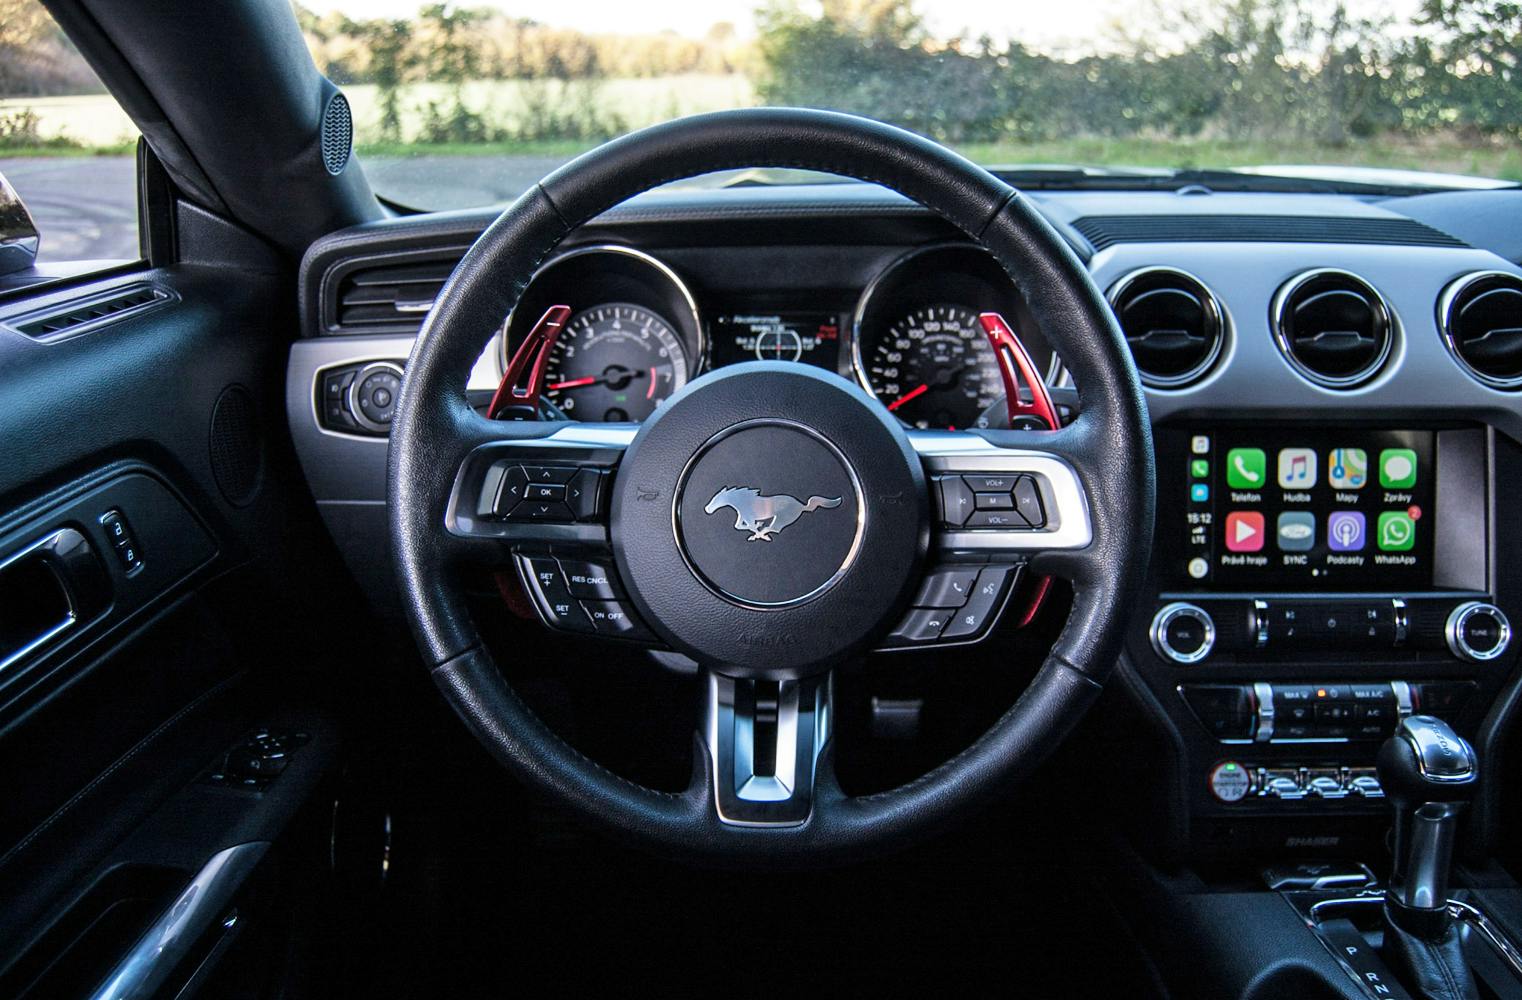 Ford Mustang GT 5.0 selber fahren | 30 Minuten im Pony Car